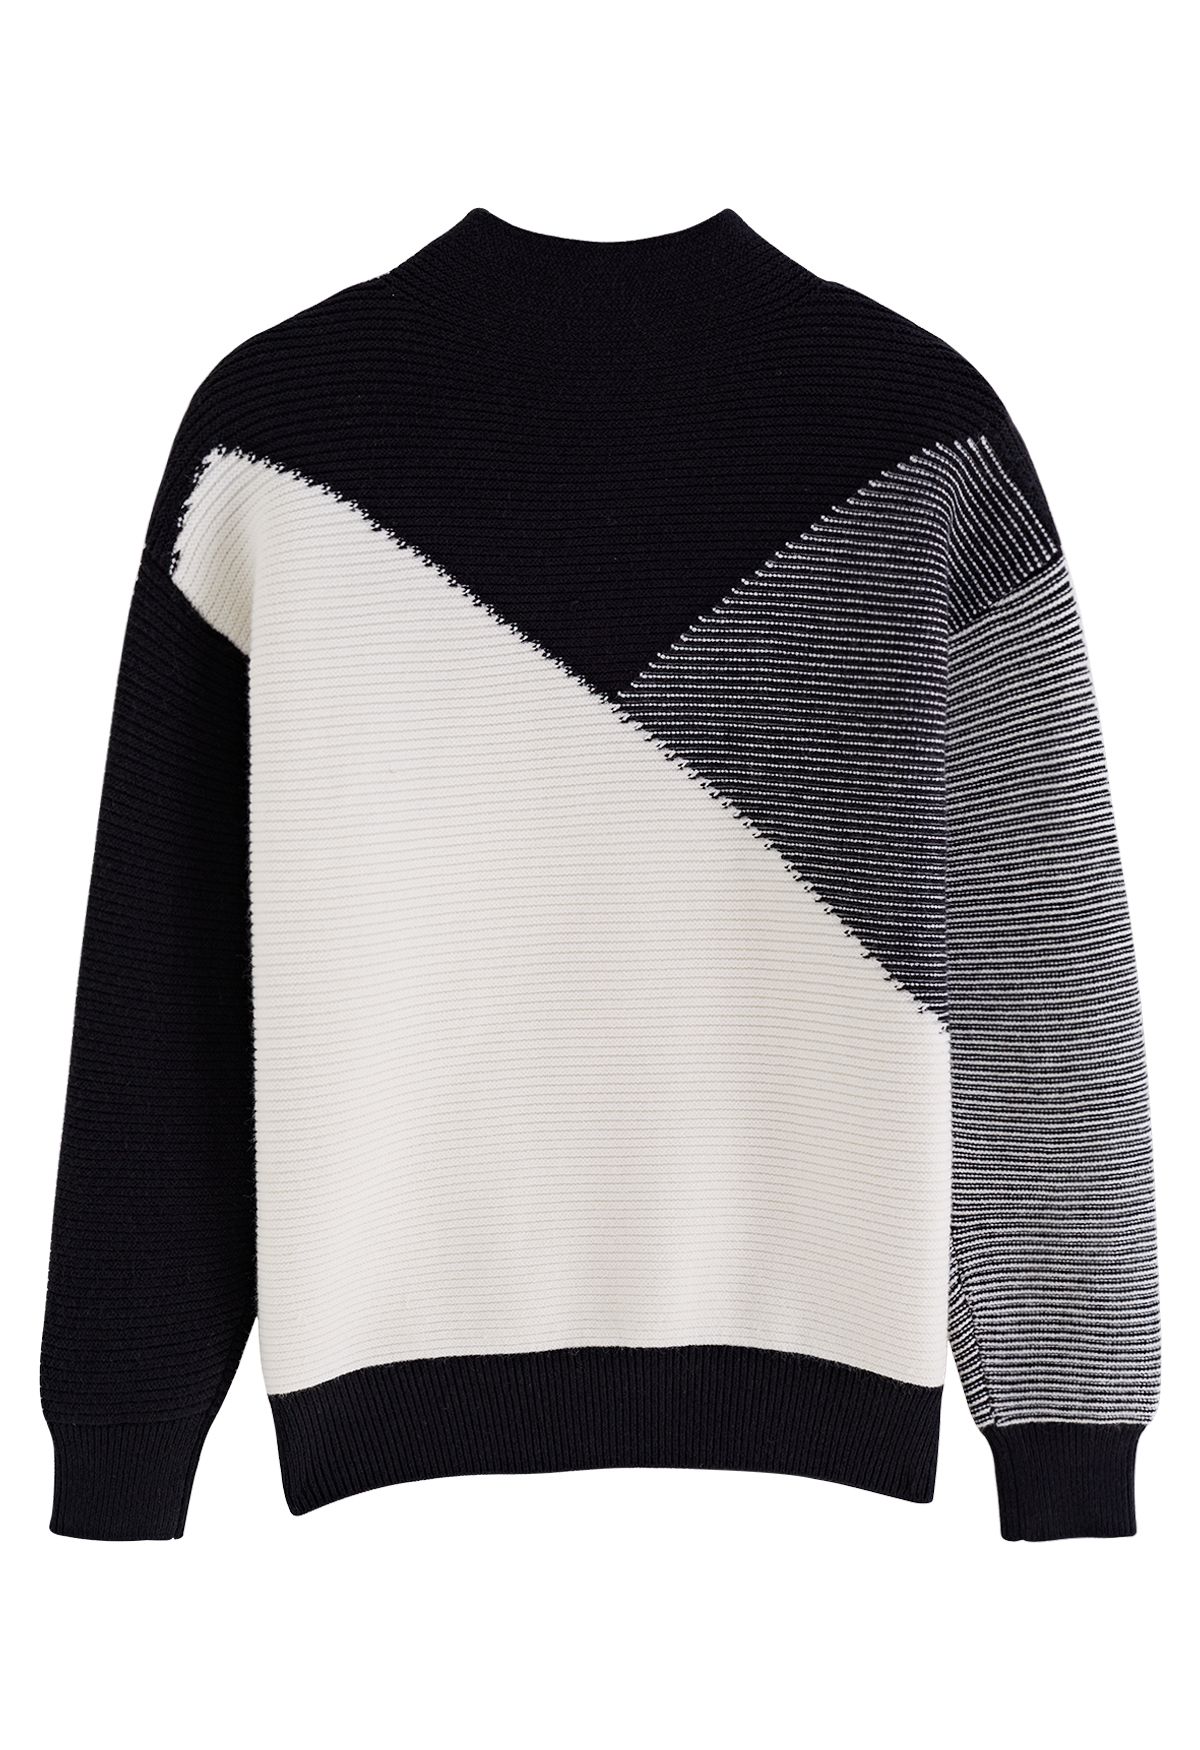 Mock Neck Color Blocked Knit Sweater in Black